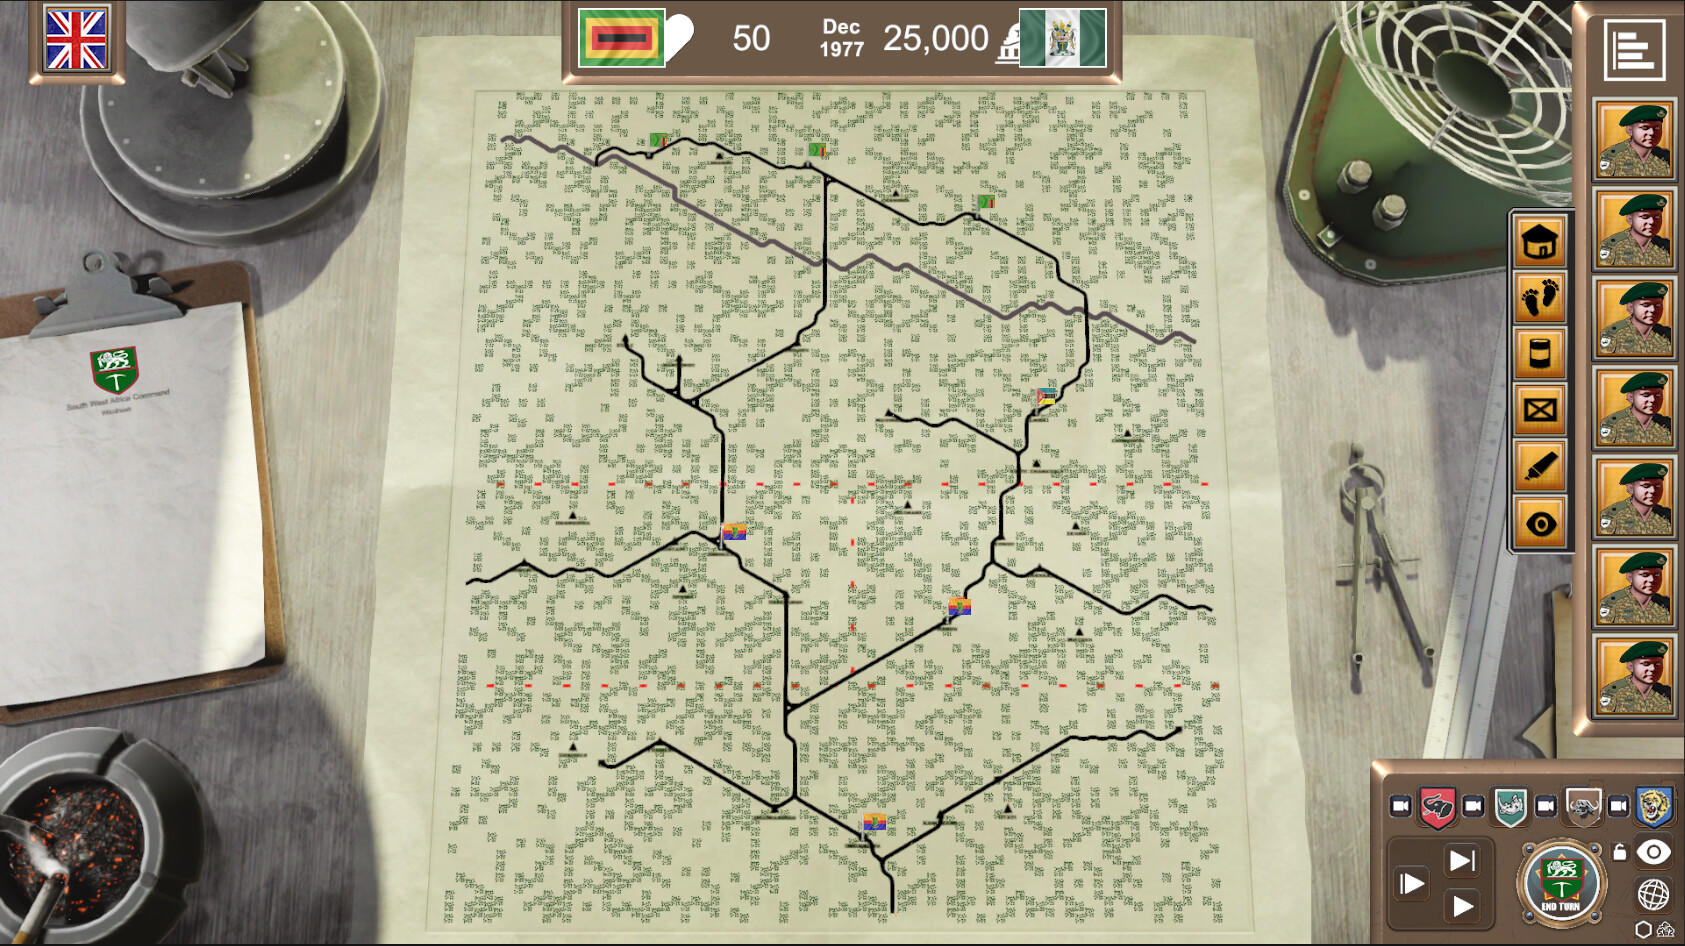 Rhodesia '72 screenshot game